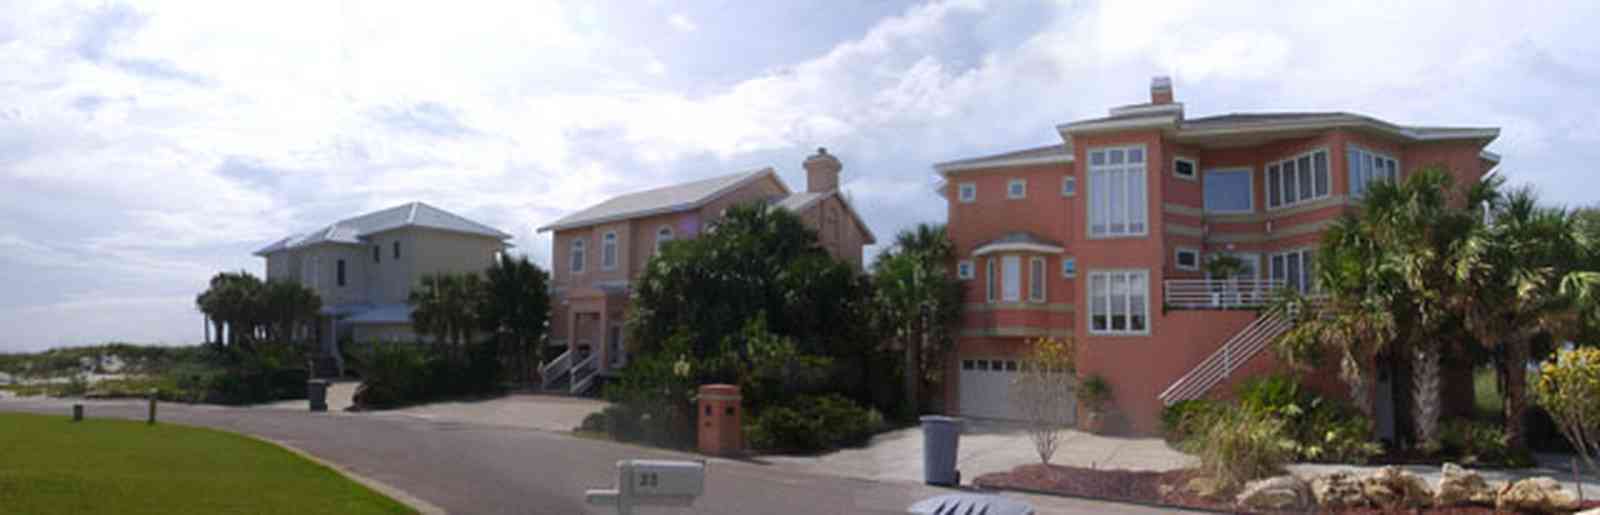 Pensacola-Beach:-Hermosa-St-Homes_05.jpg:  beachfront homes, mediterrean villa,  gulf of mexico, palm trees, 